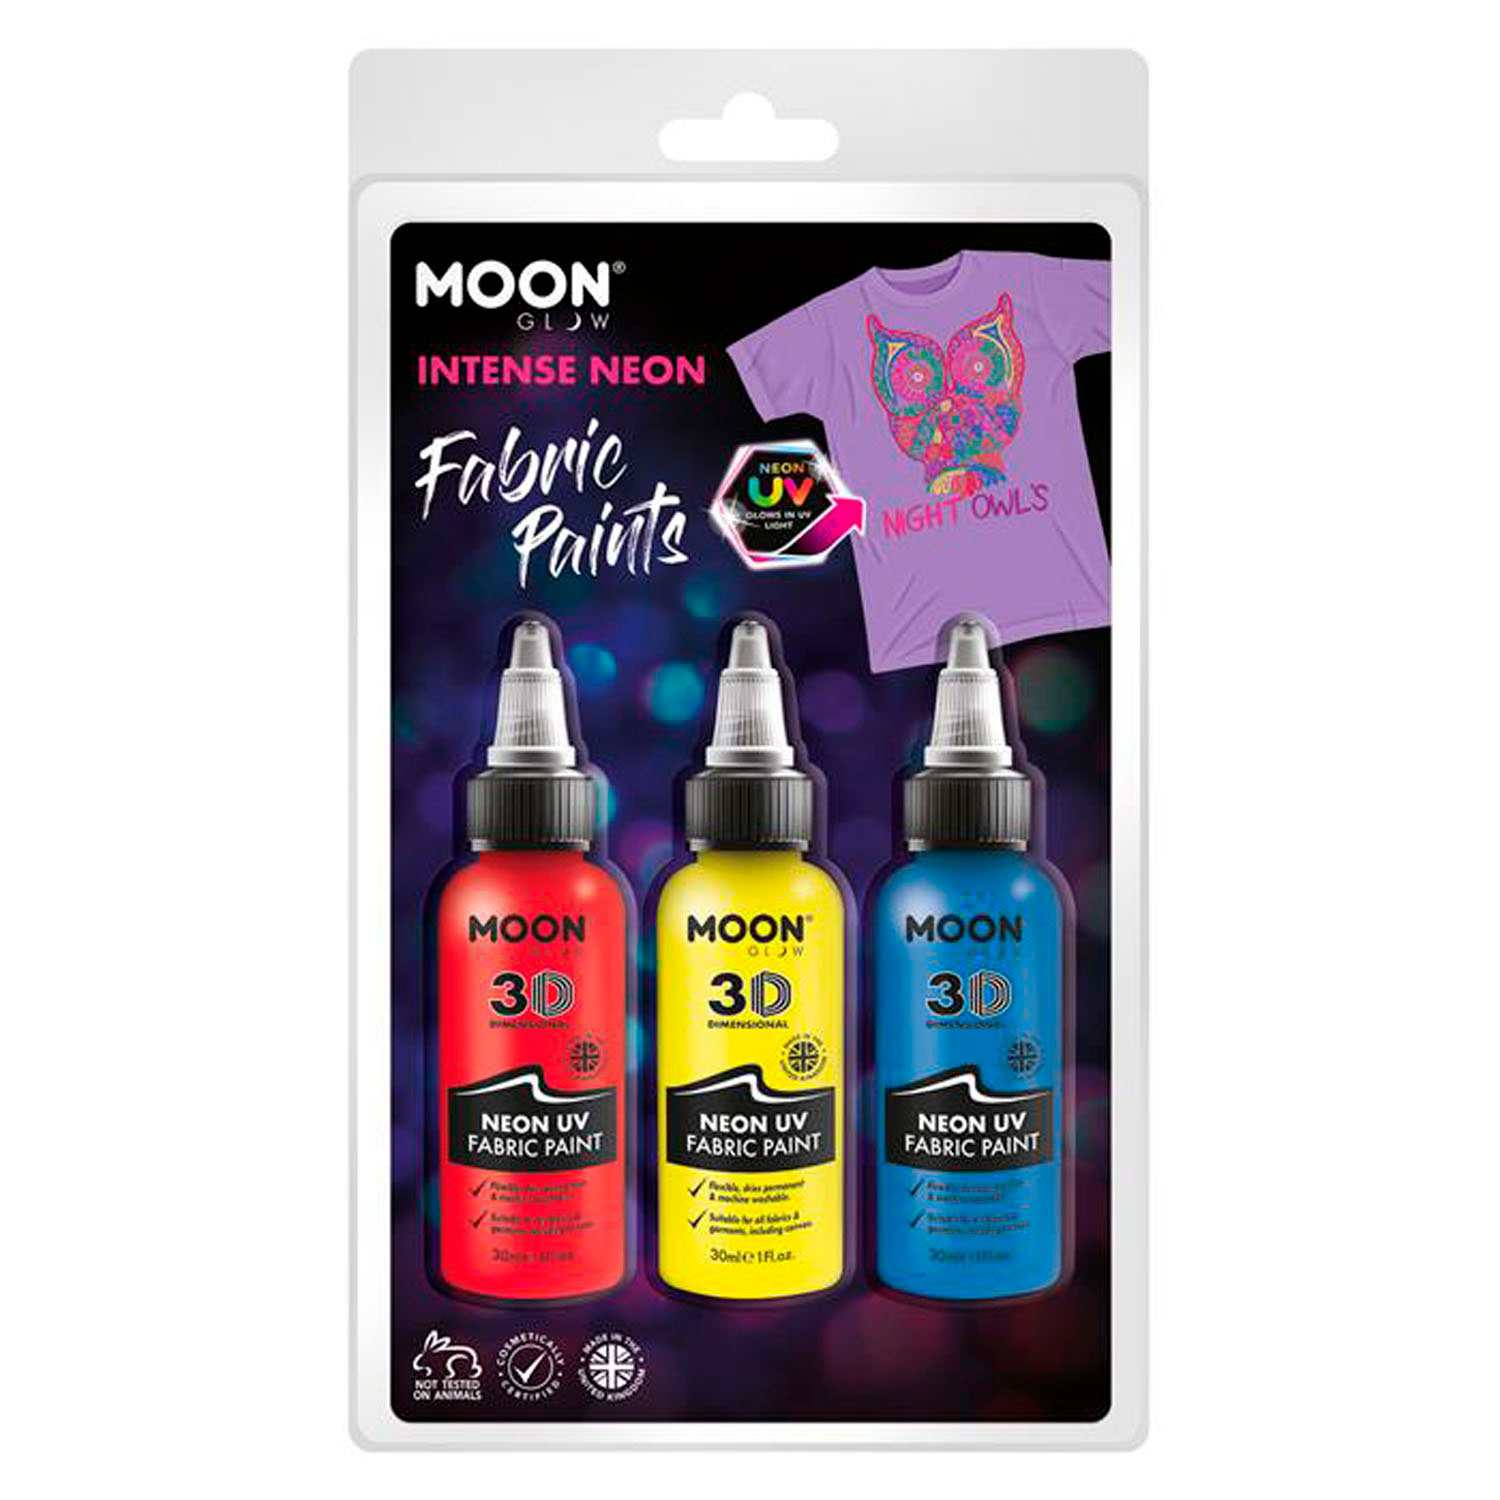 Moon Glow - Neon UV Fabric Paint - 30ml - Intense Yellow